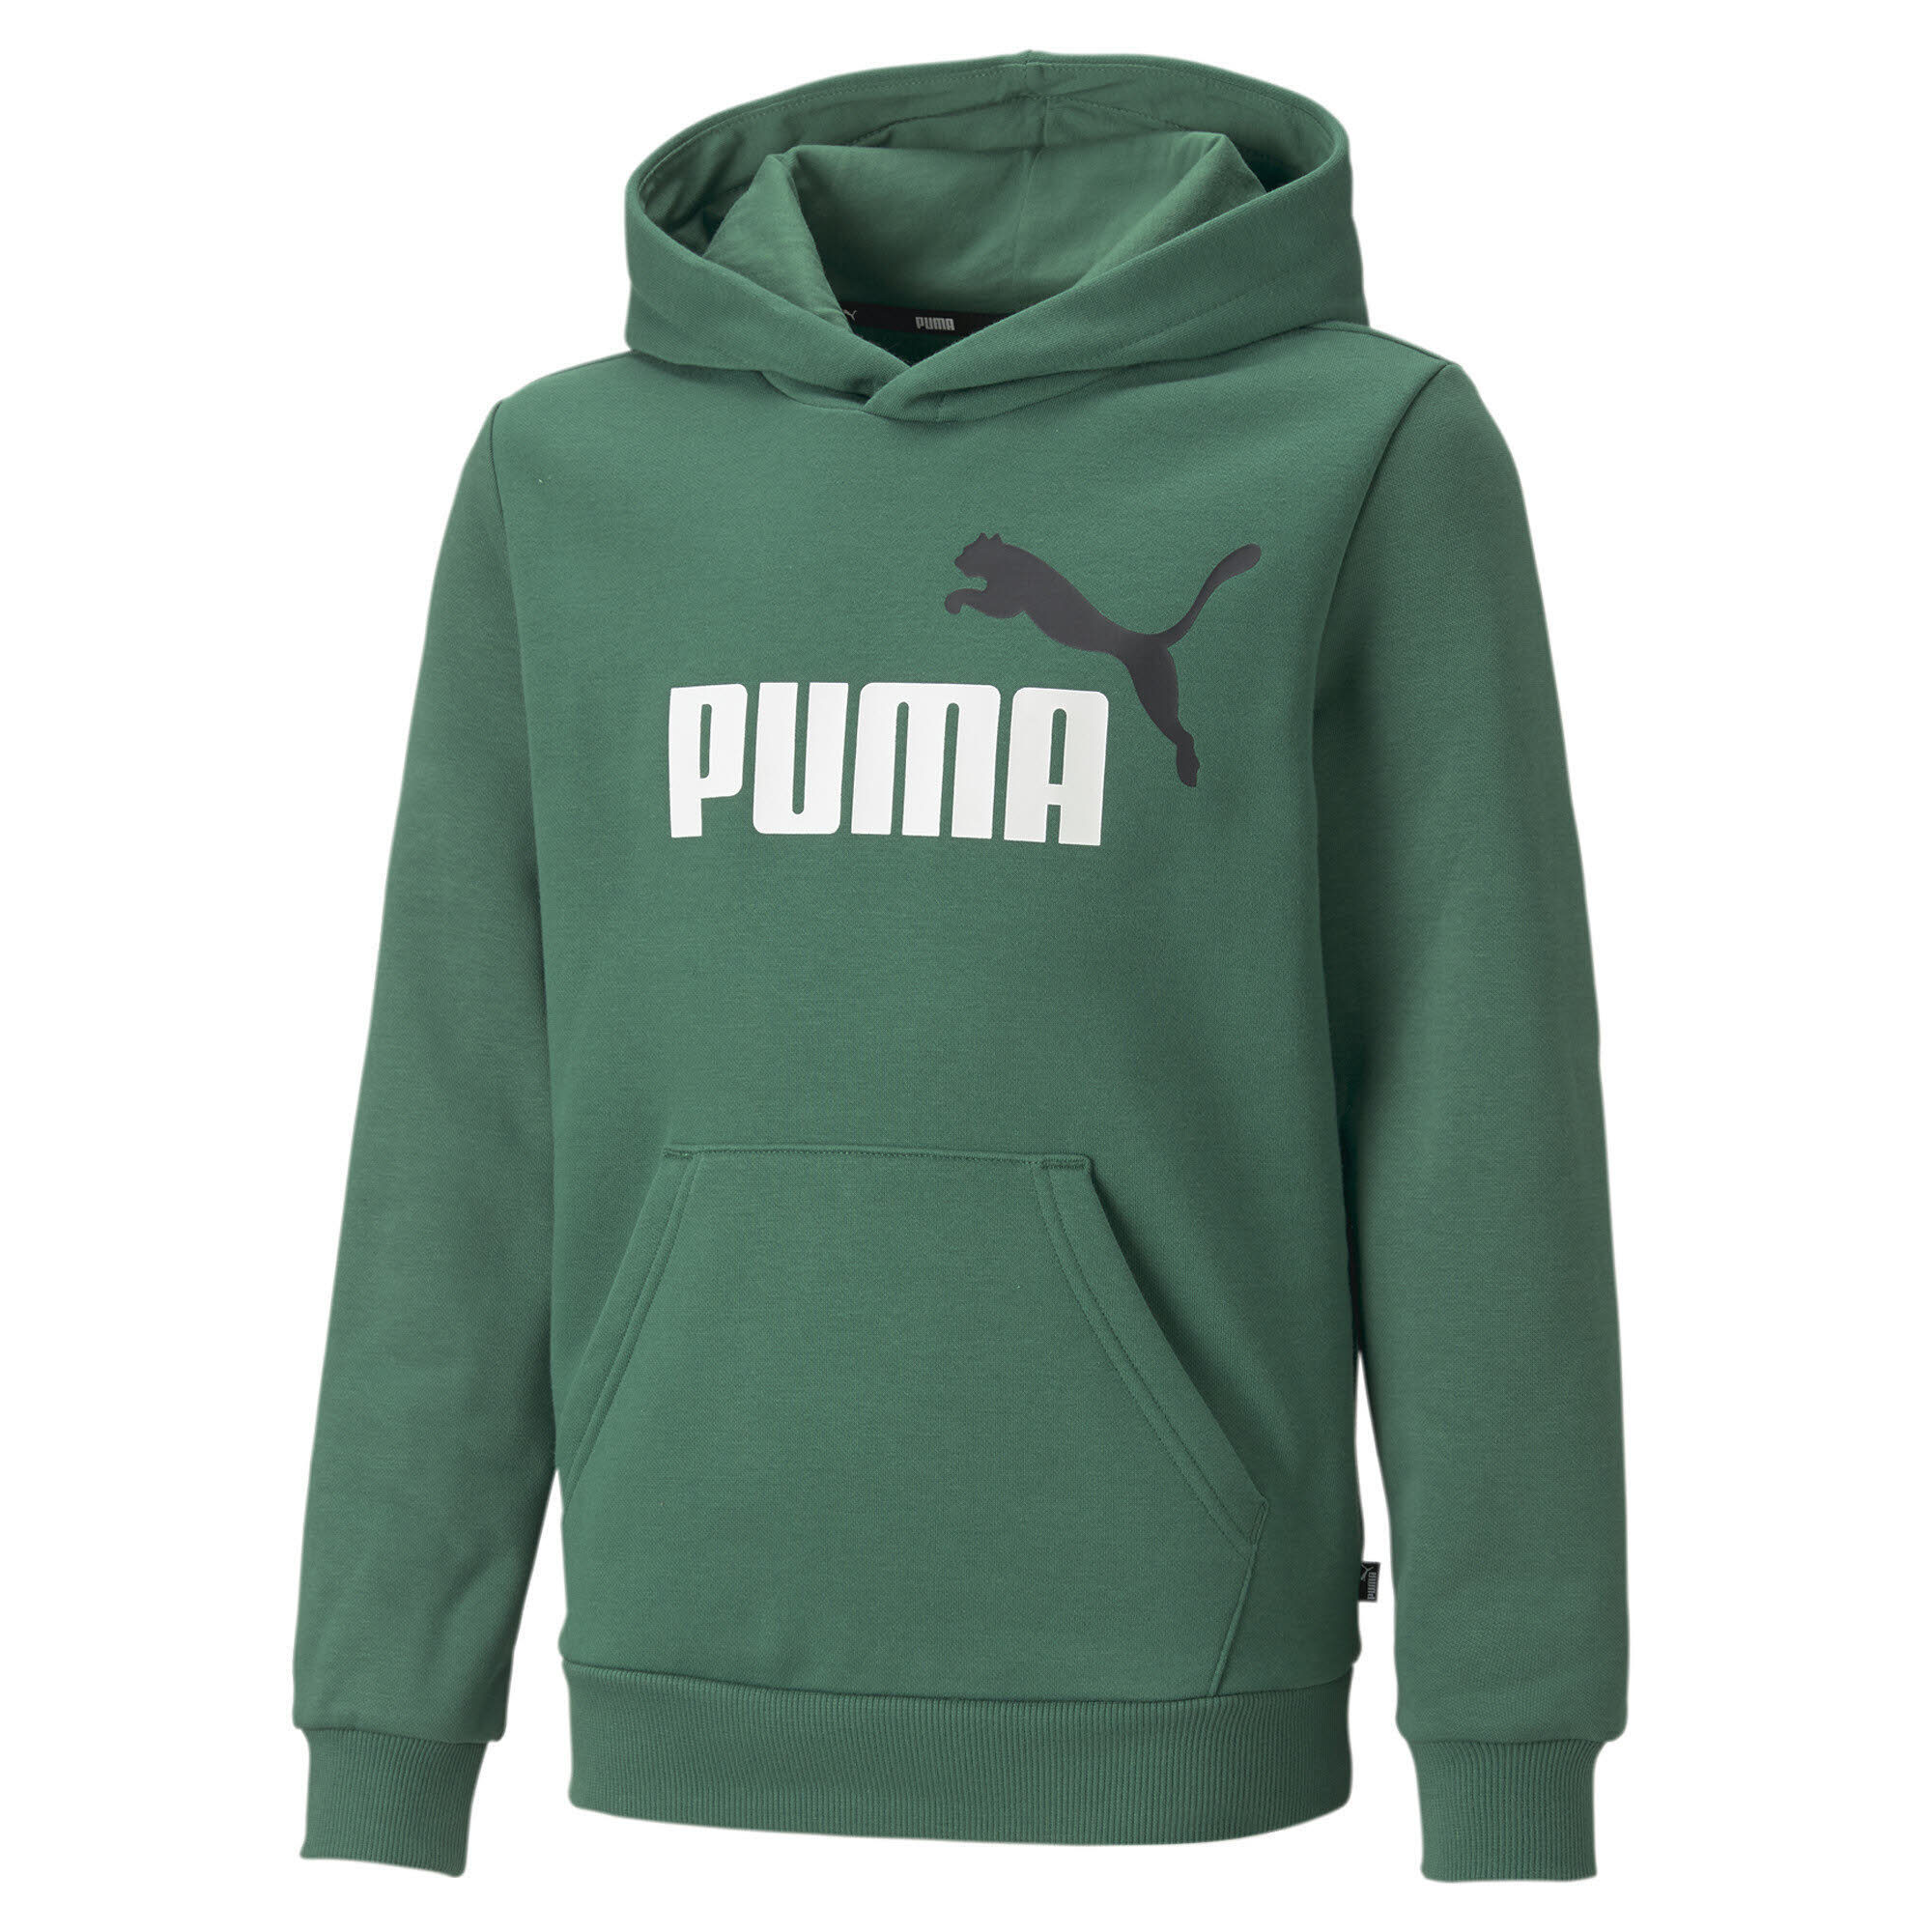 Puma Essentials+ Two-Tone Big Logo Jugend Sweatshirt Hoodie Kinder Jungen dunkelgrün